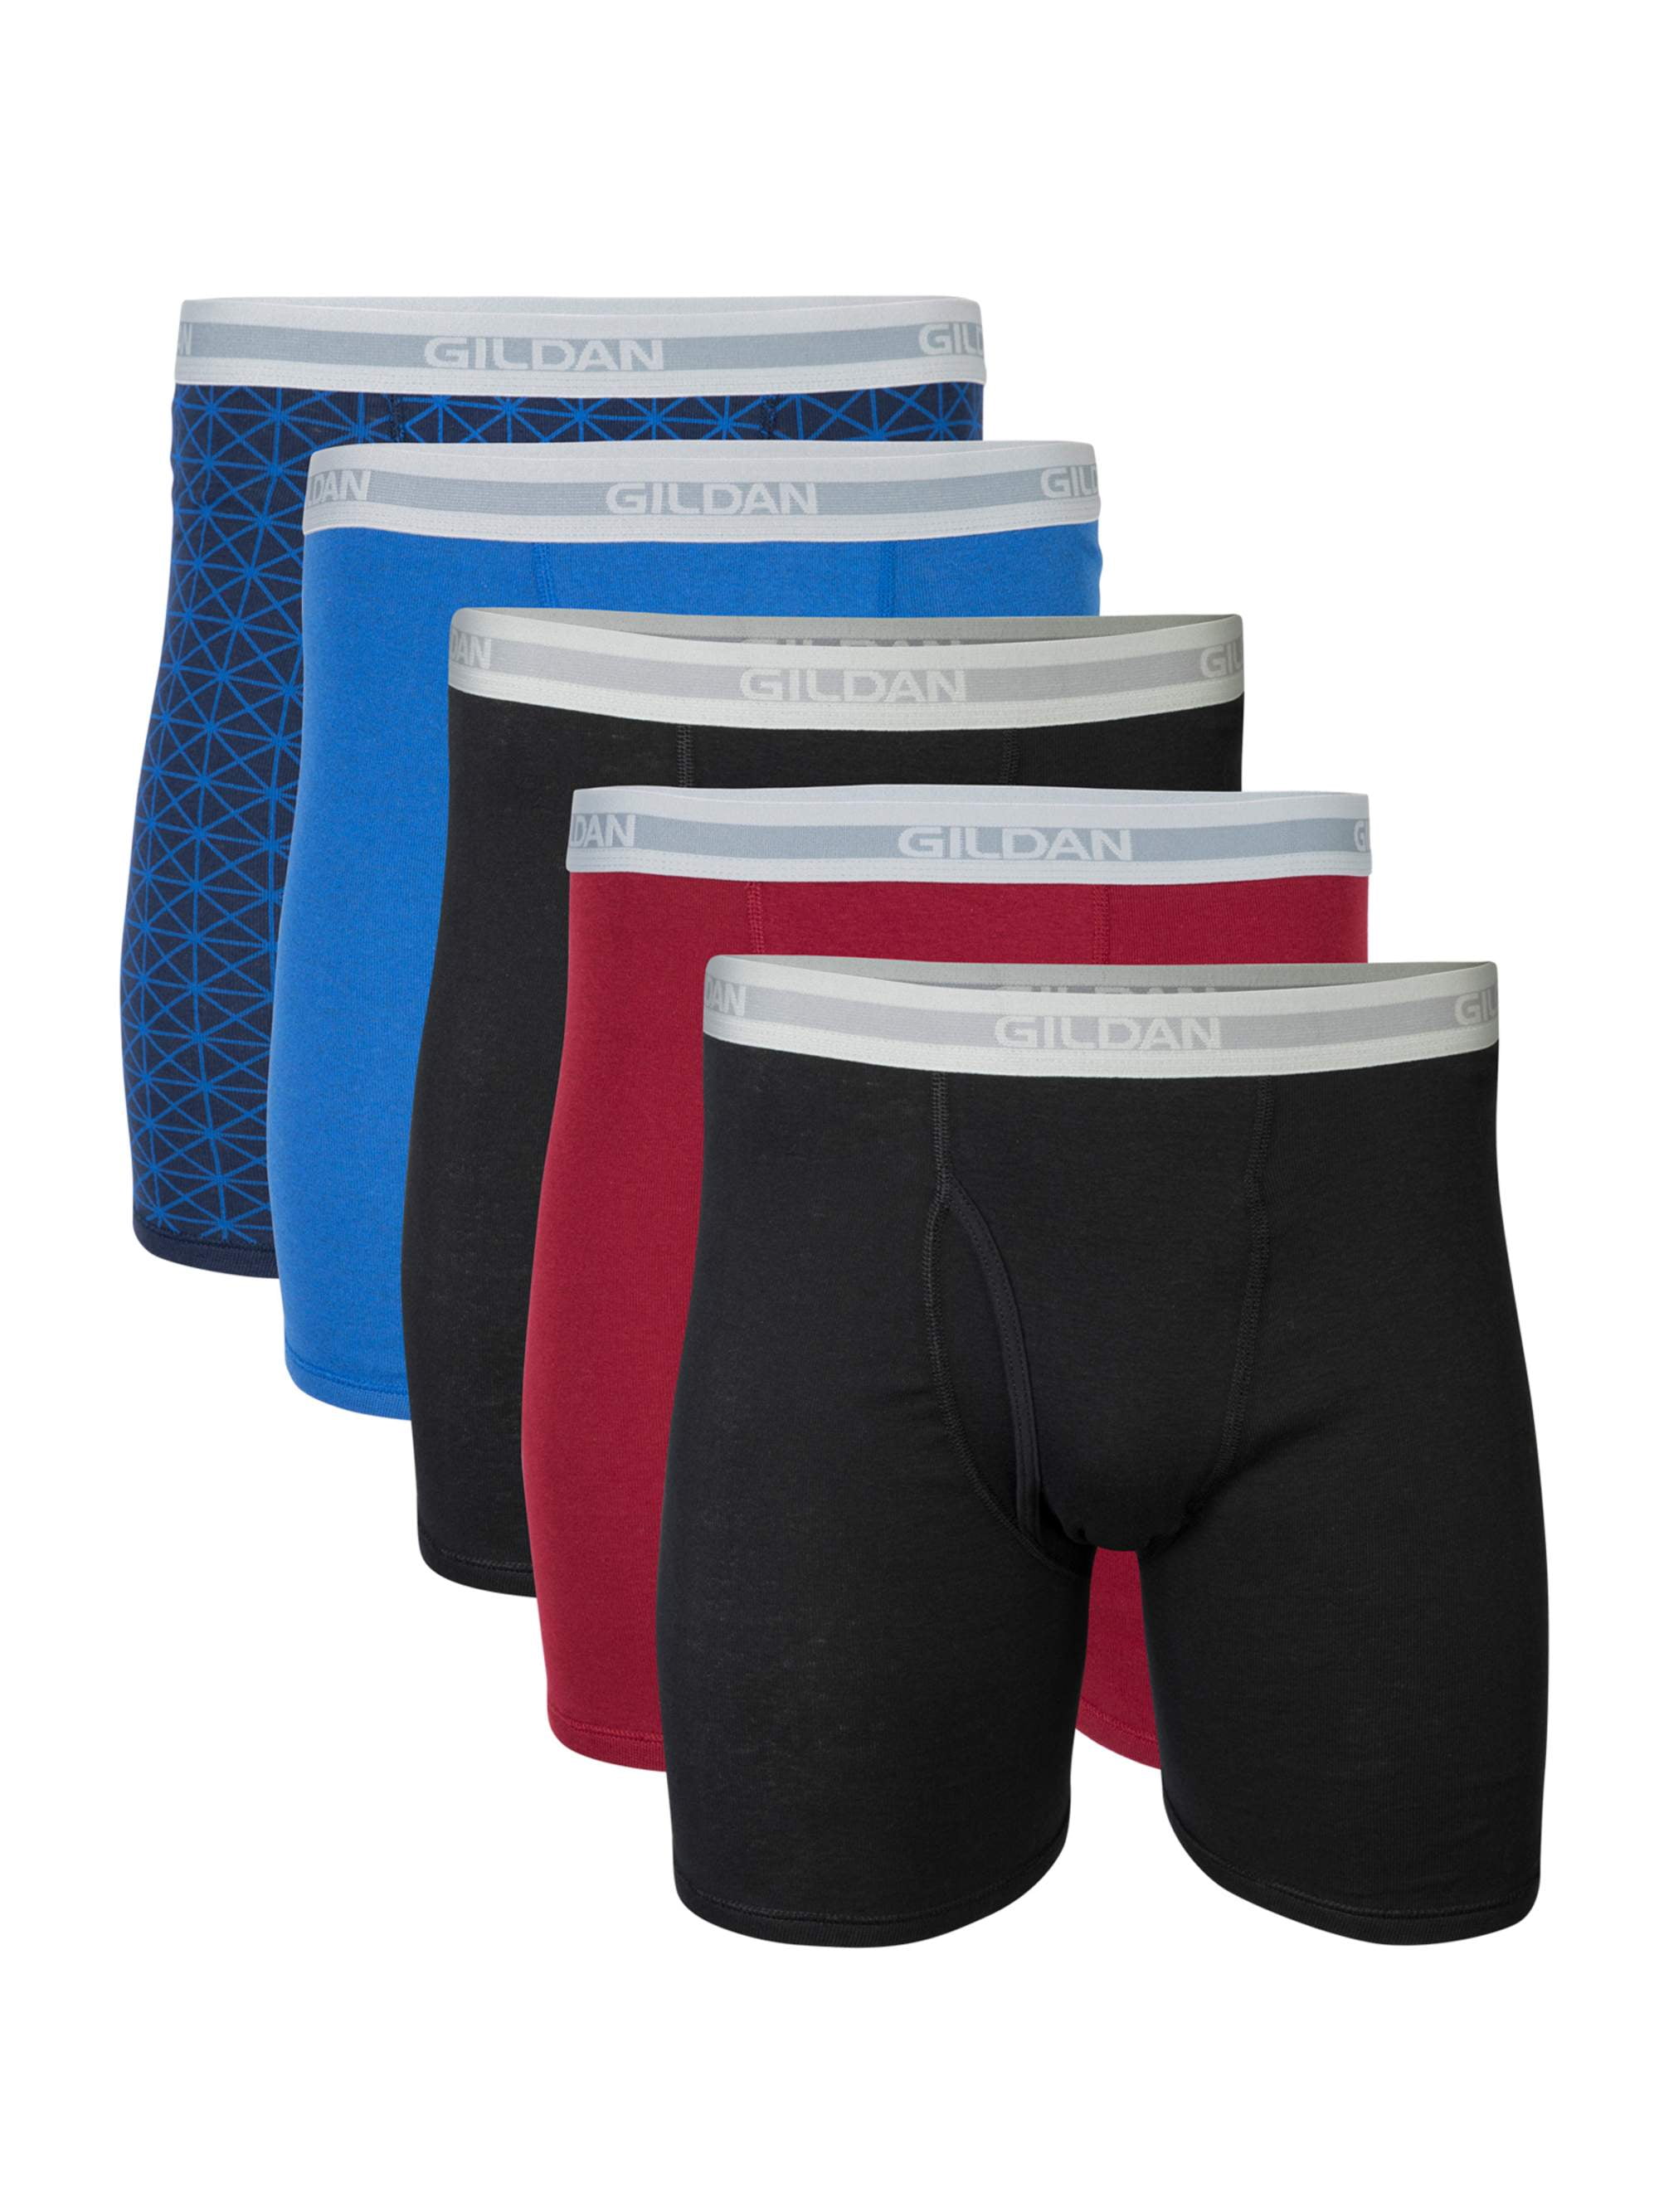 3 6 12 Pk 2 XL to 6 XL Mens Soft Cotton Briefs Underwear Hipsters Pants Sizes 